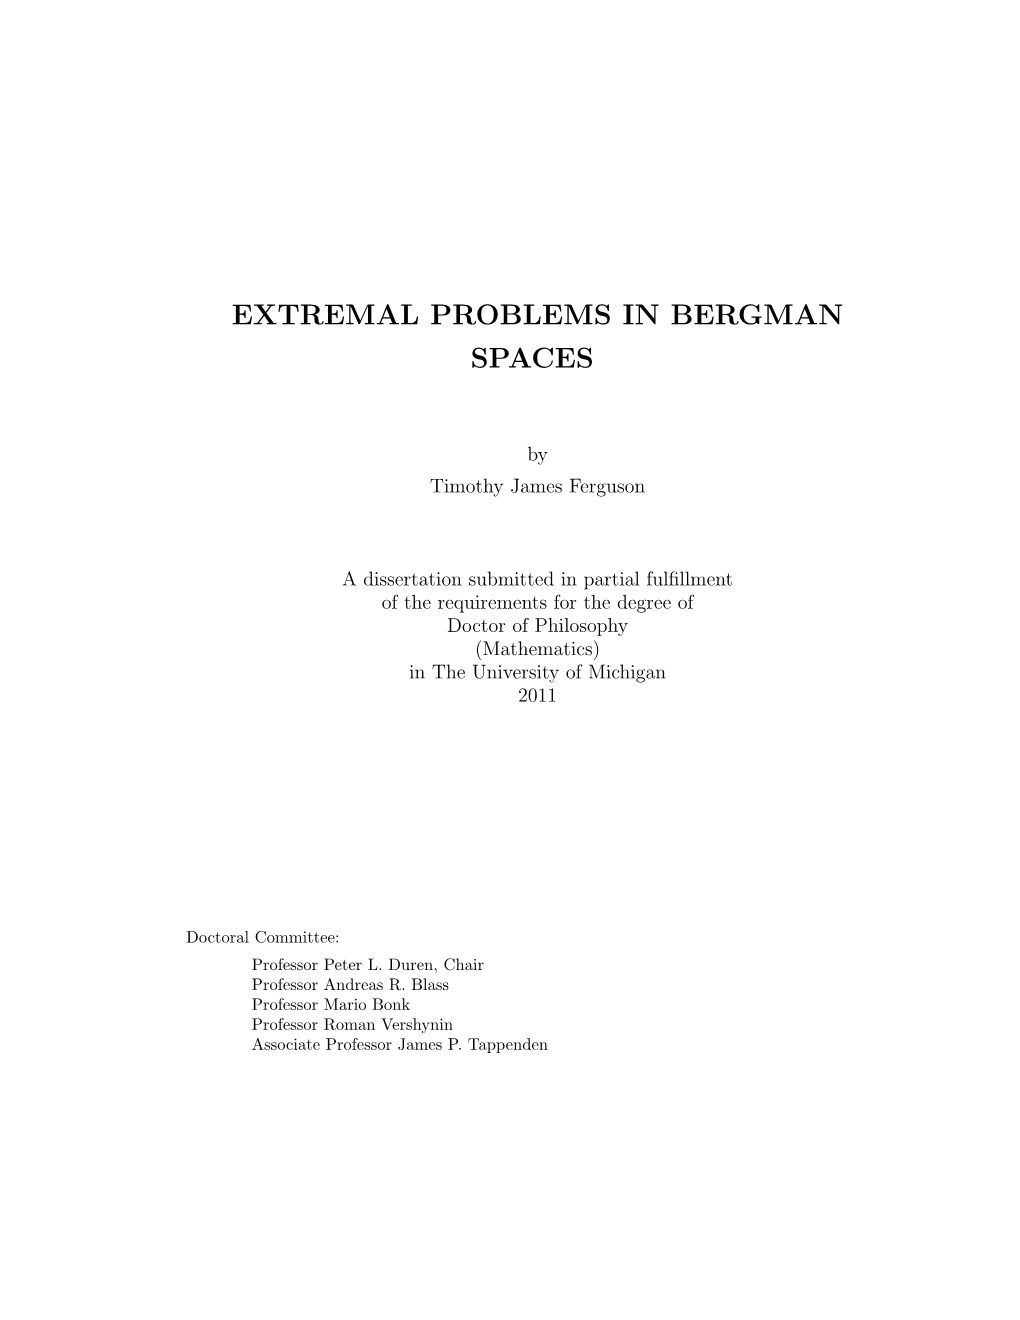 Extremal Problems in Bergman Spaces